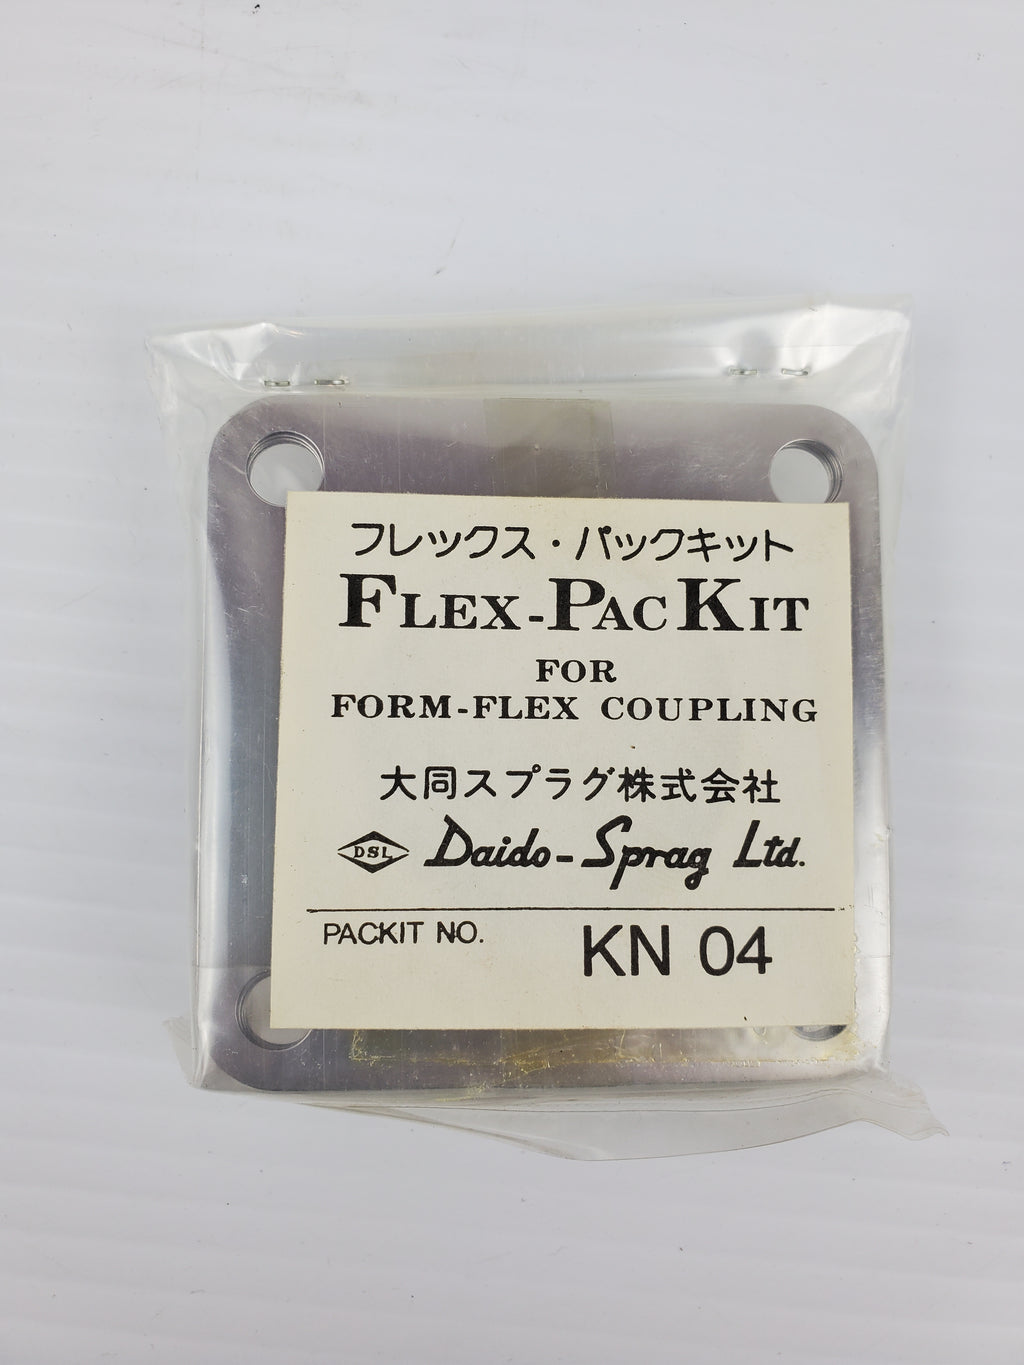 Daido Sprag LTD KN04 Flex - Pac Kit for Form Flex Coupling Packit No KN 04